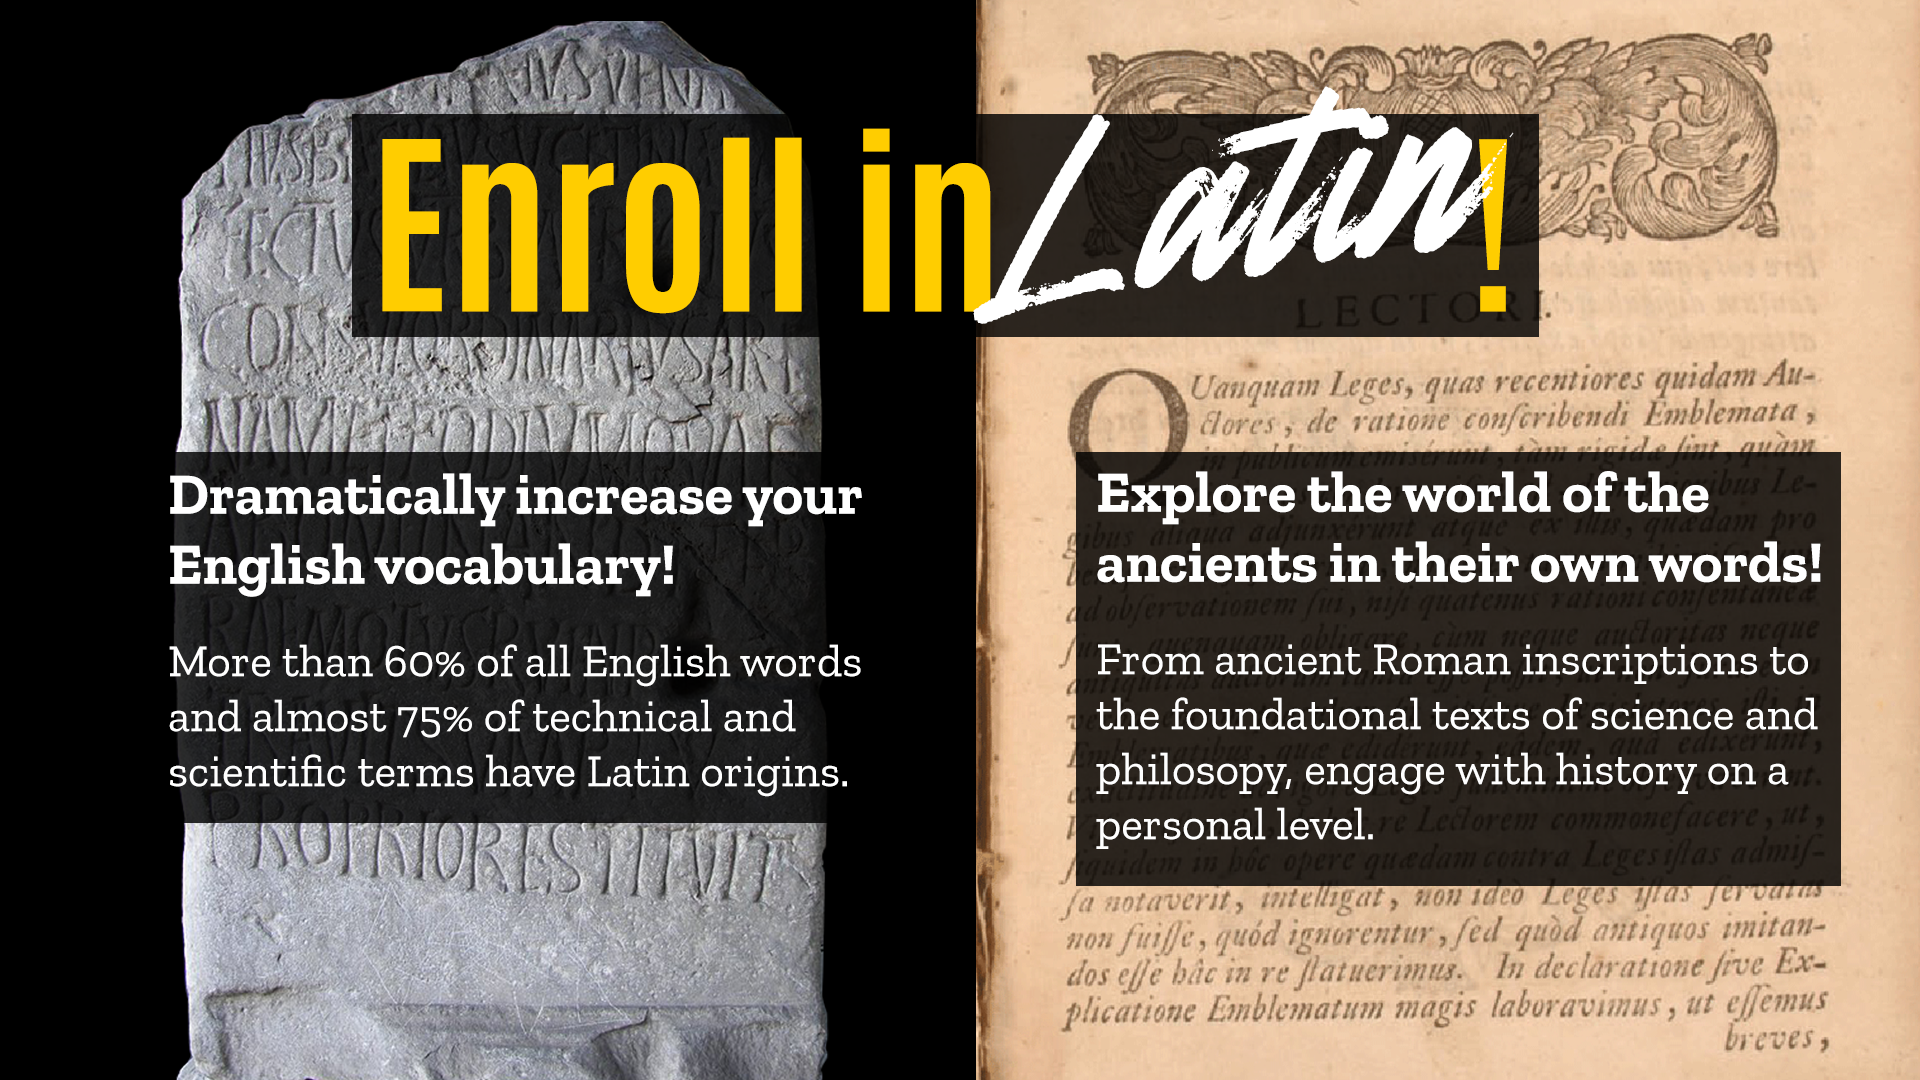 sign encouraging enrollment in Latin